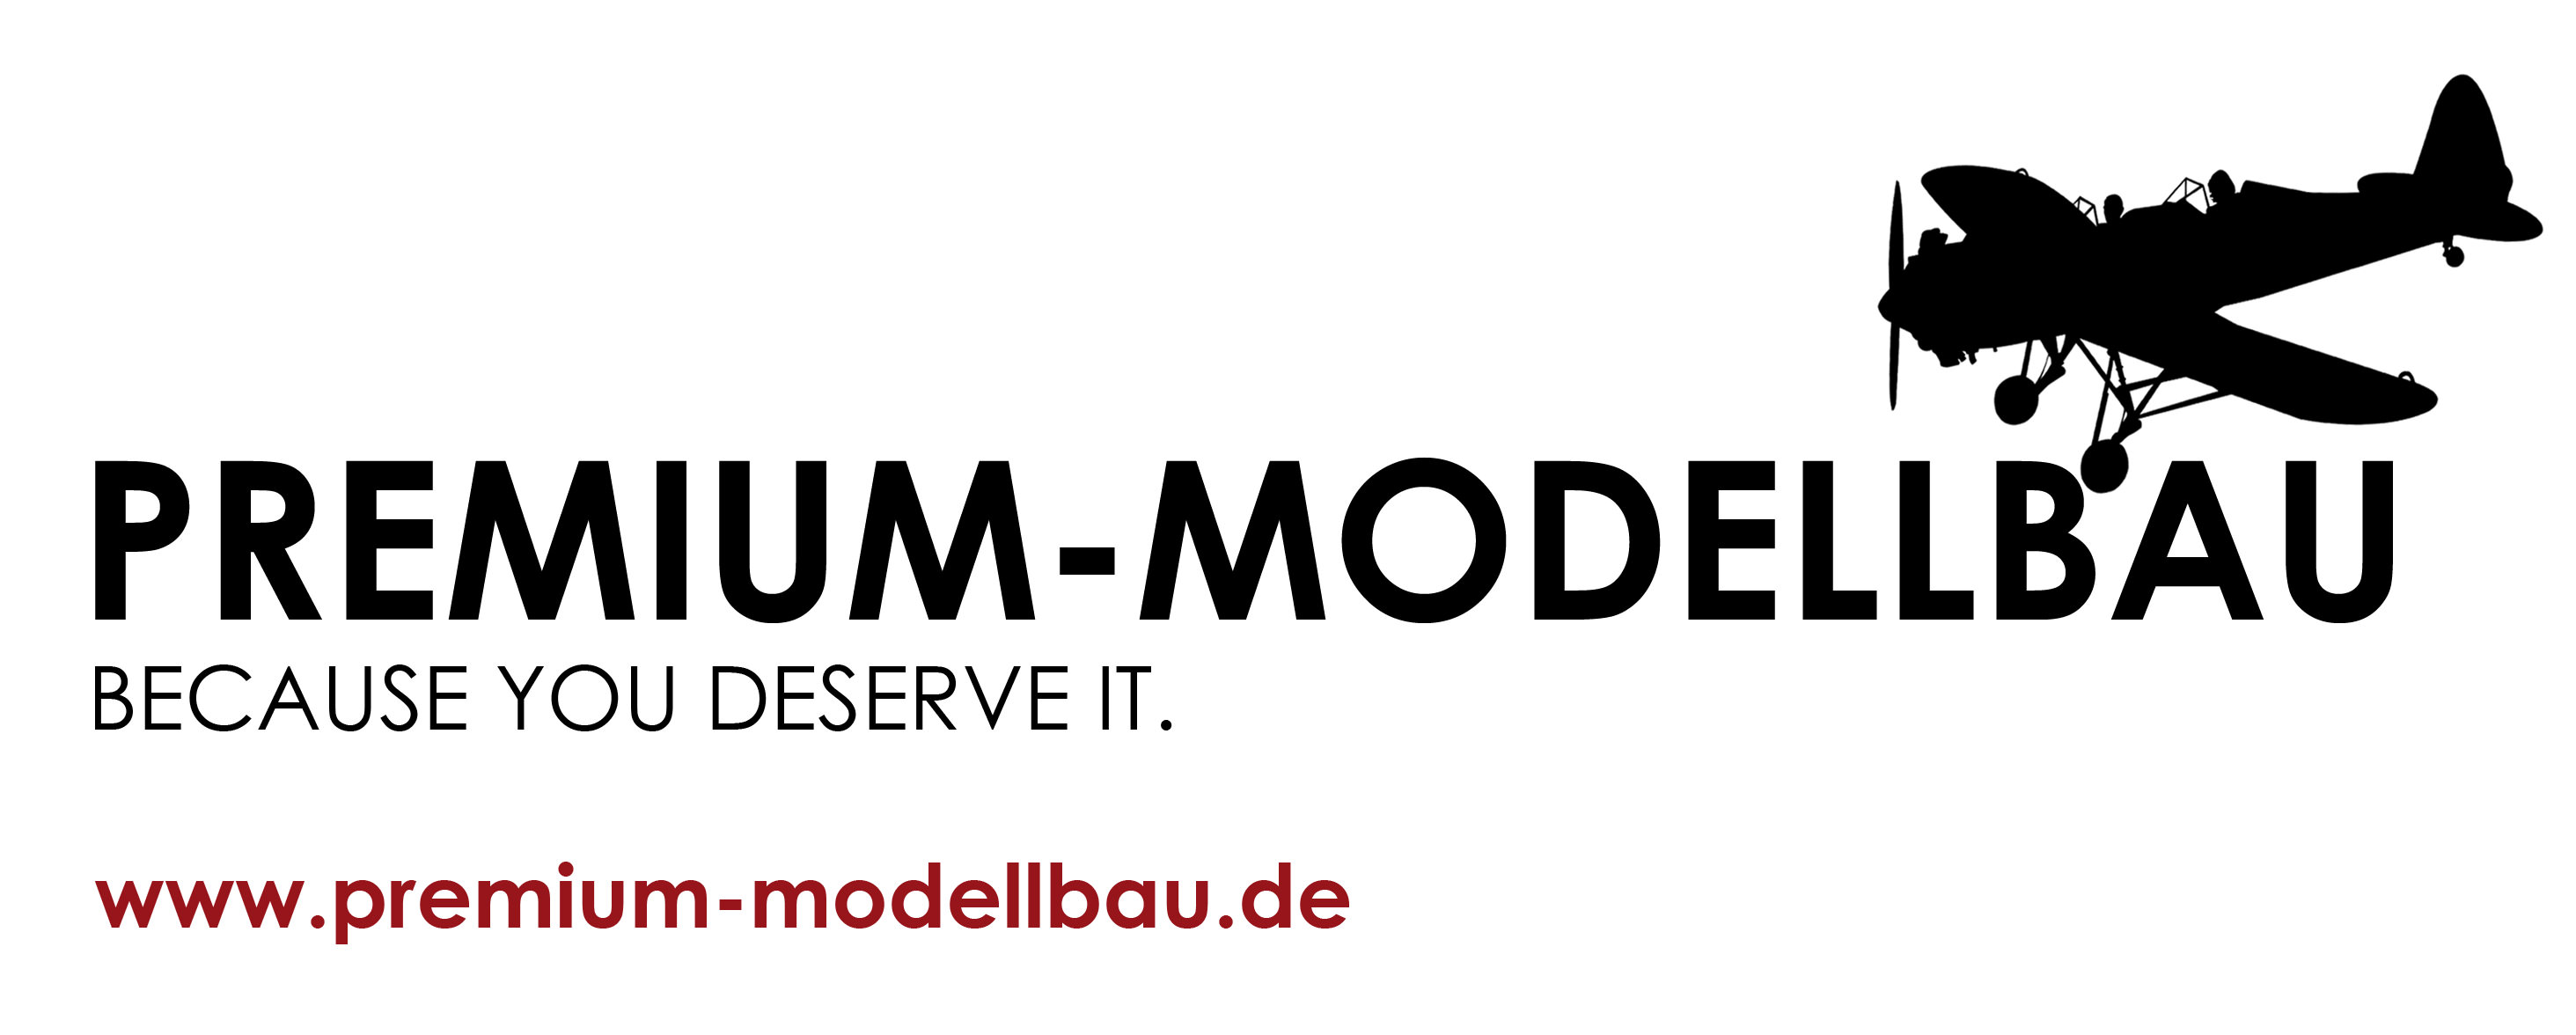 Premium Modellbau Banner